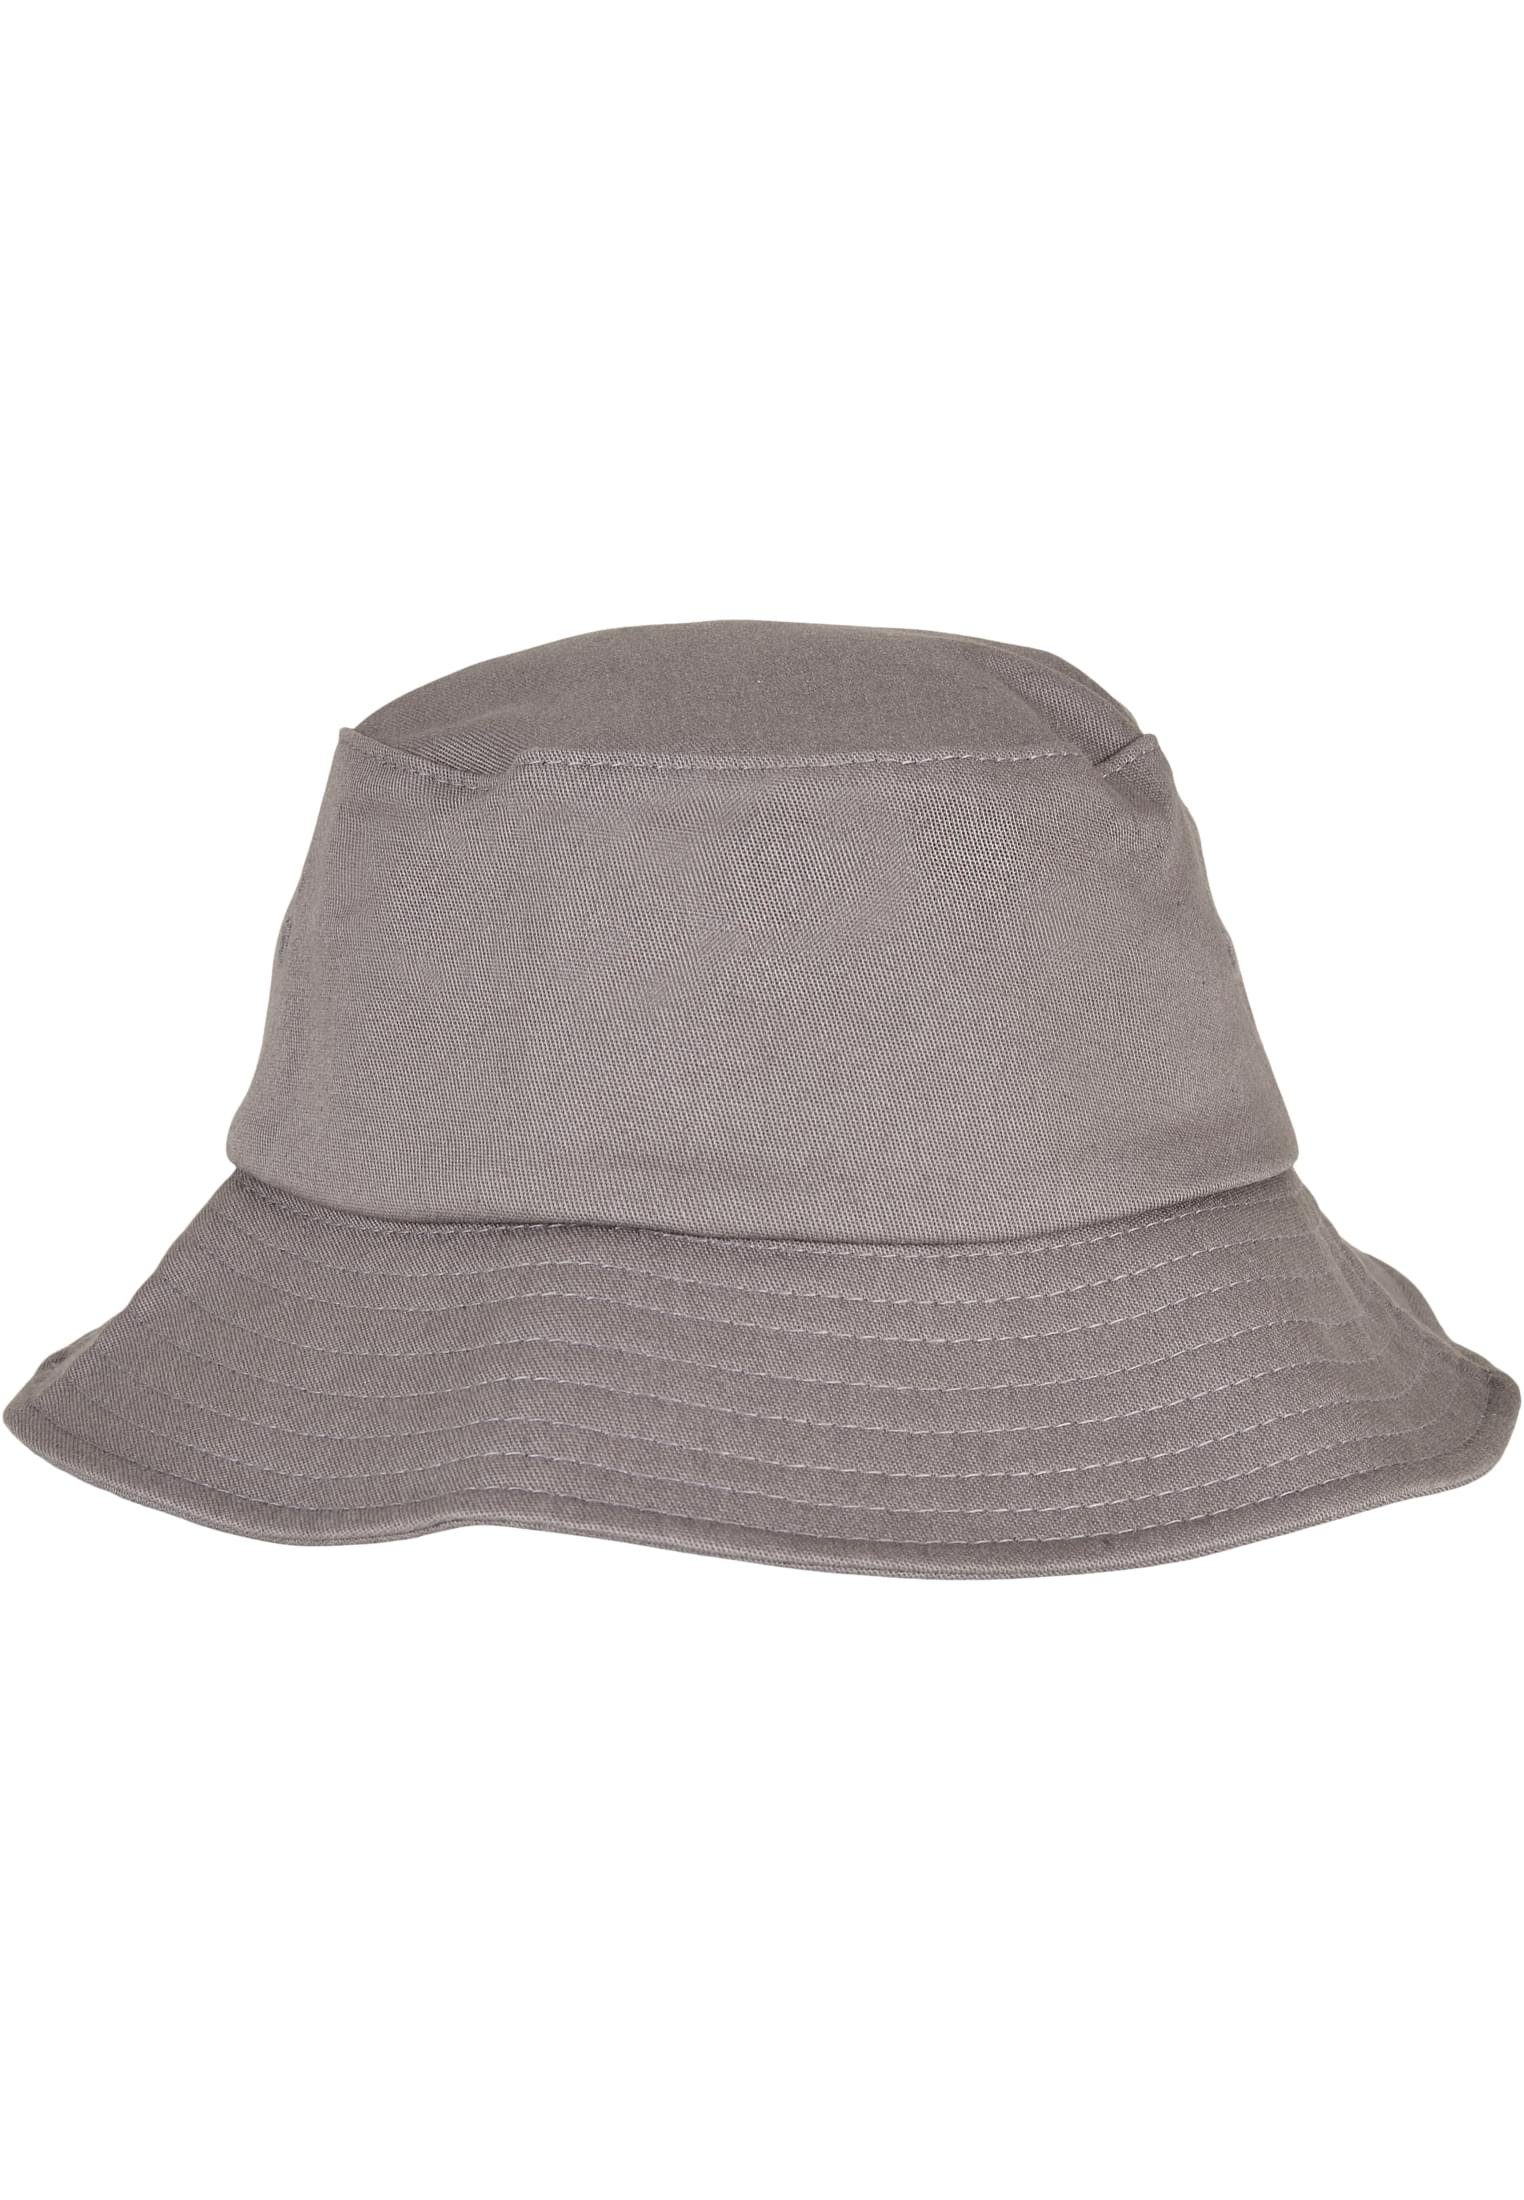 [Menge ist groß] Flexfit Flex Cap Accessoires Cotton Kids grey Bucket Hat Flexfit Twill